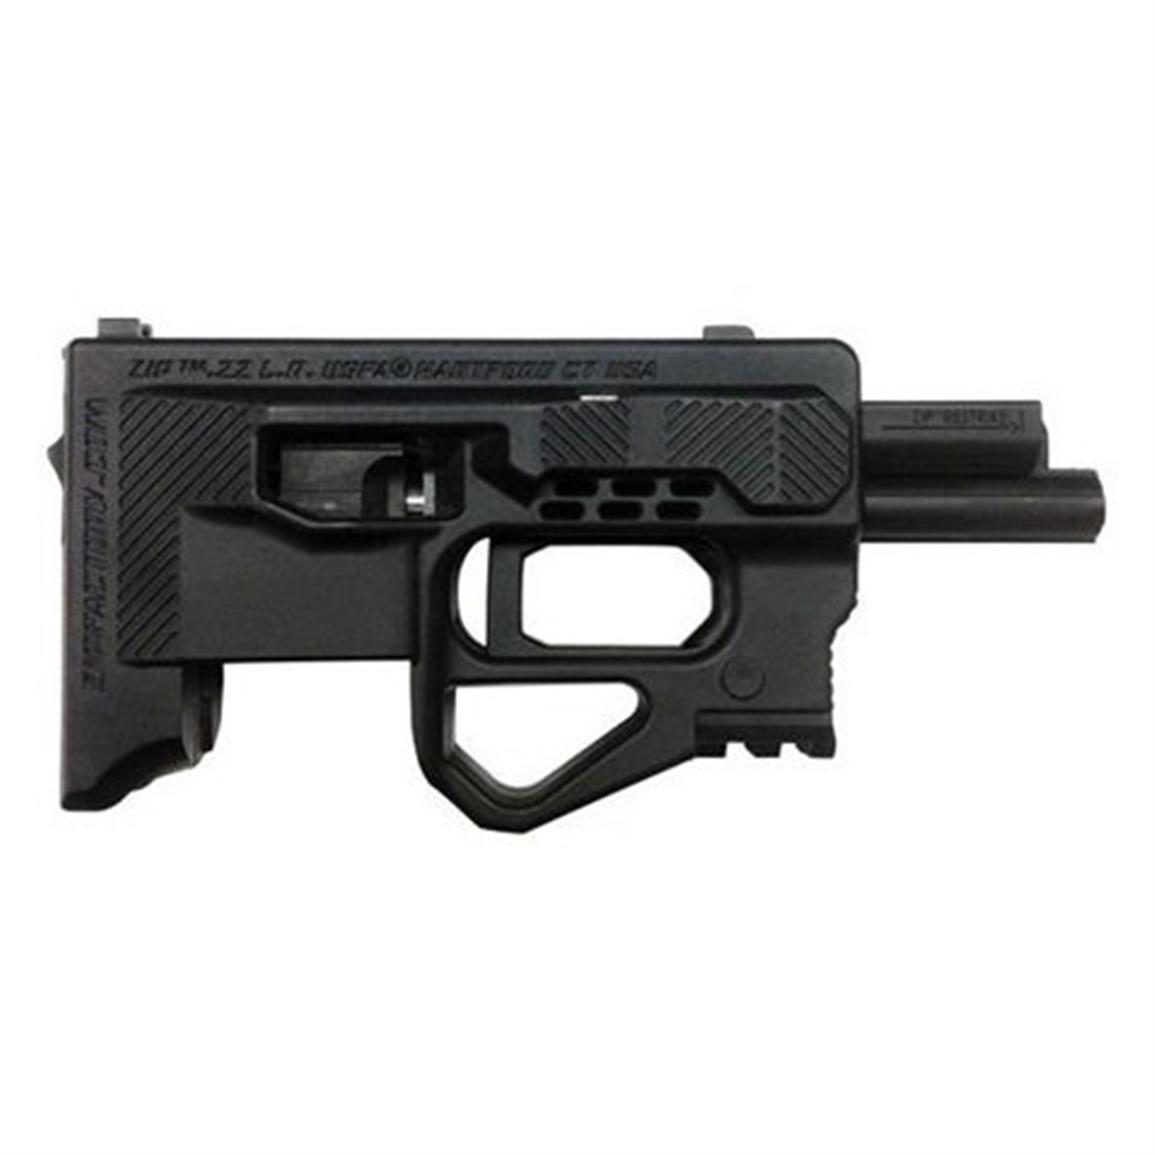 U.S. Firearms ZiP BASIC, Semi-automatic, .22LR, 5.25